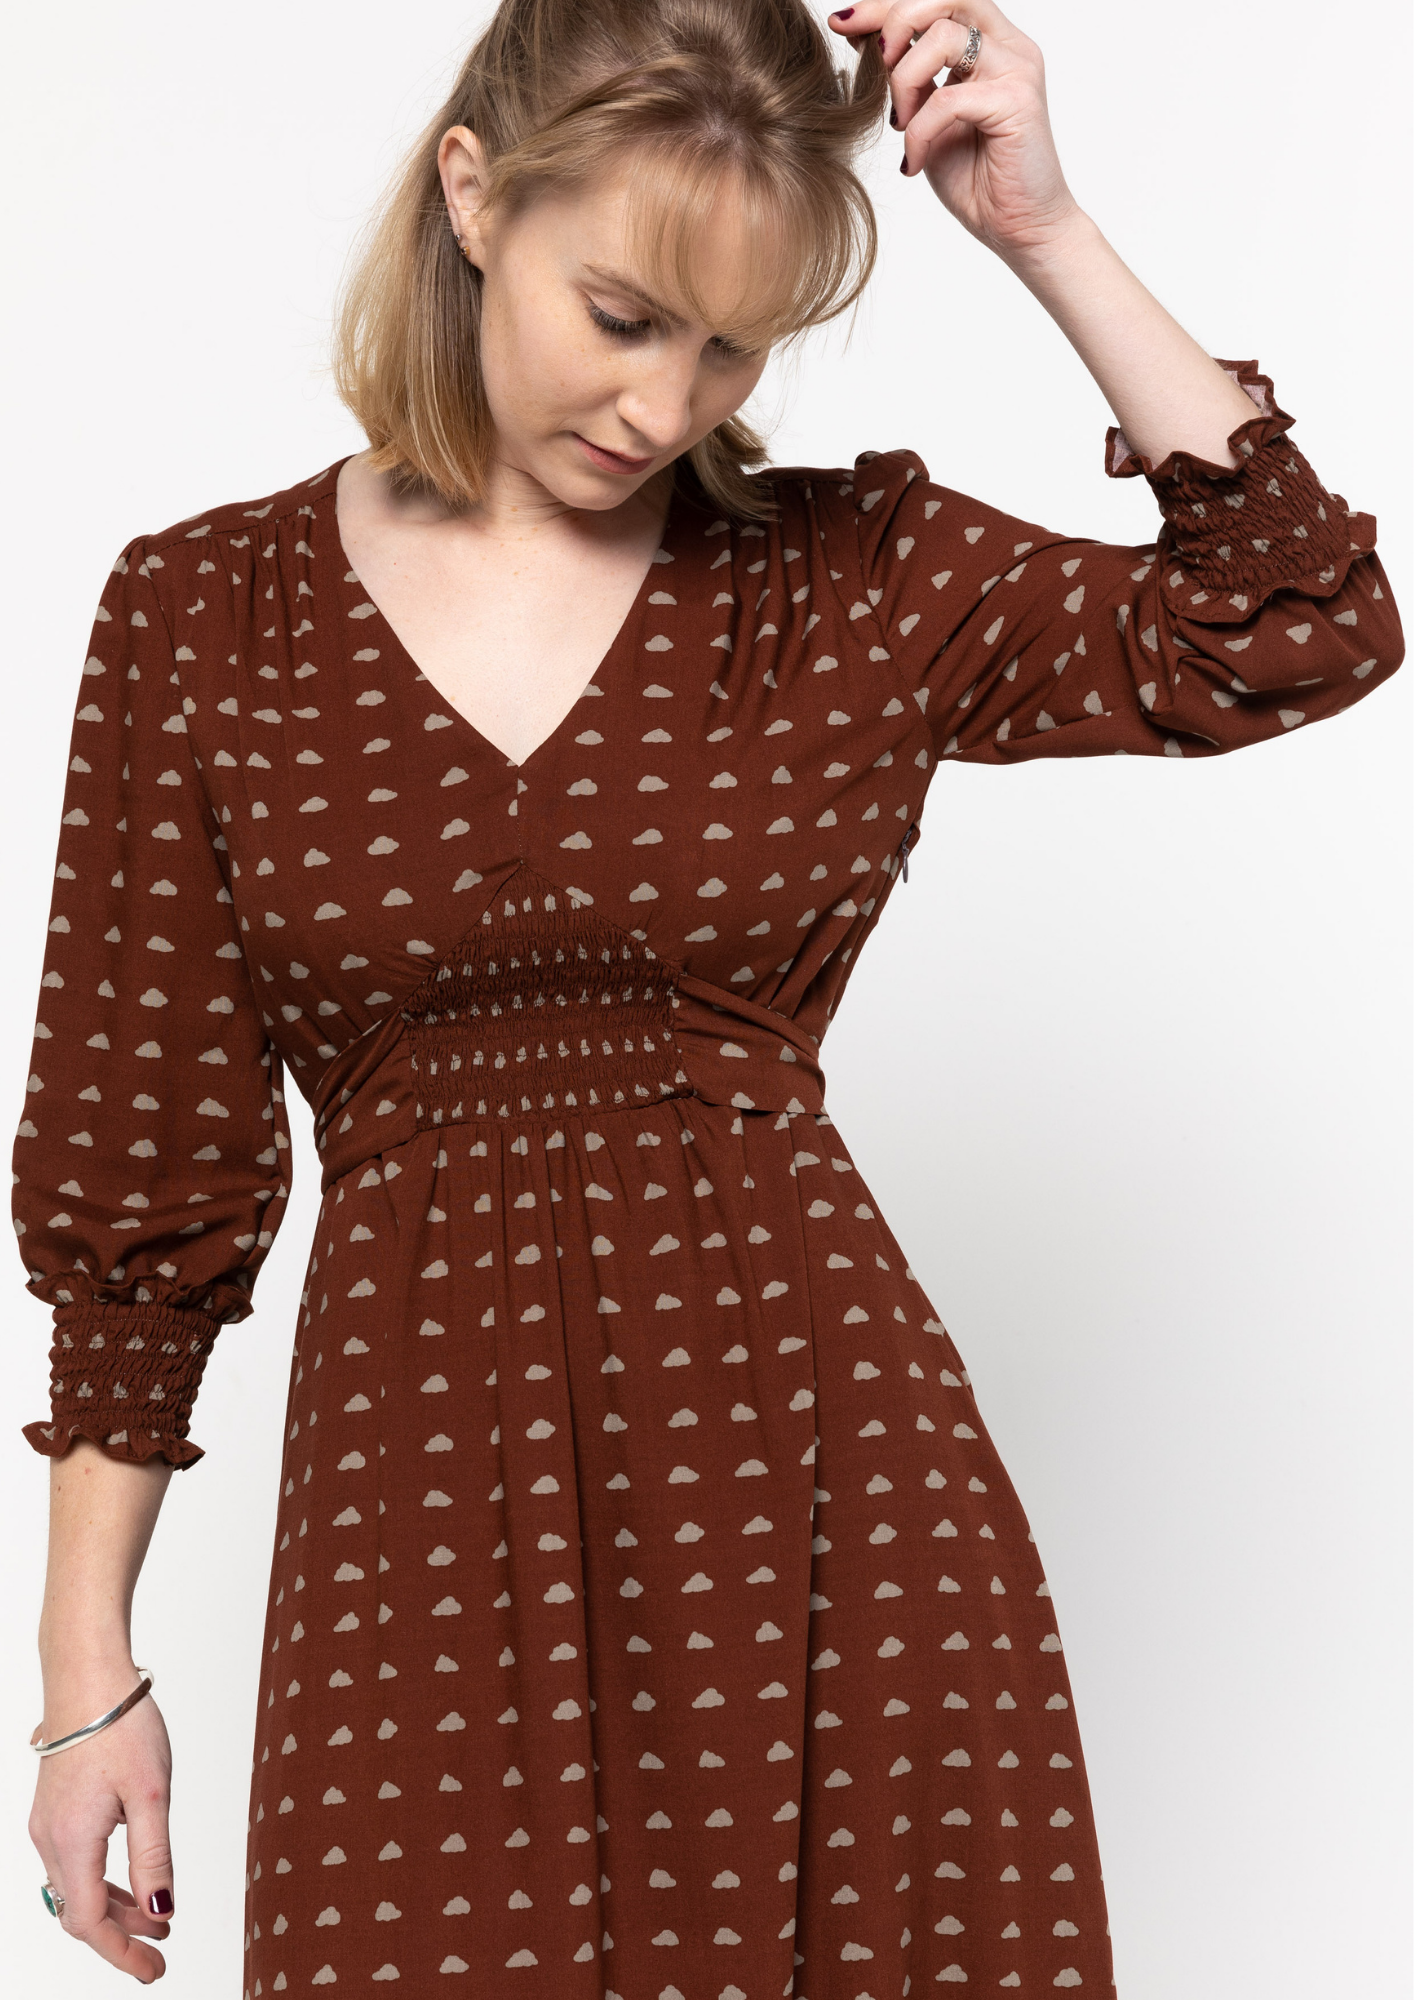 New Release Pattern - Philomena Woven Dress 